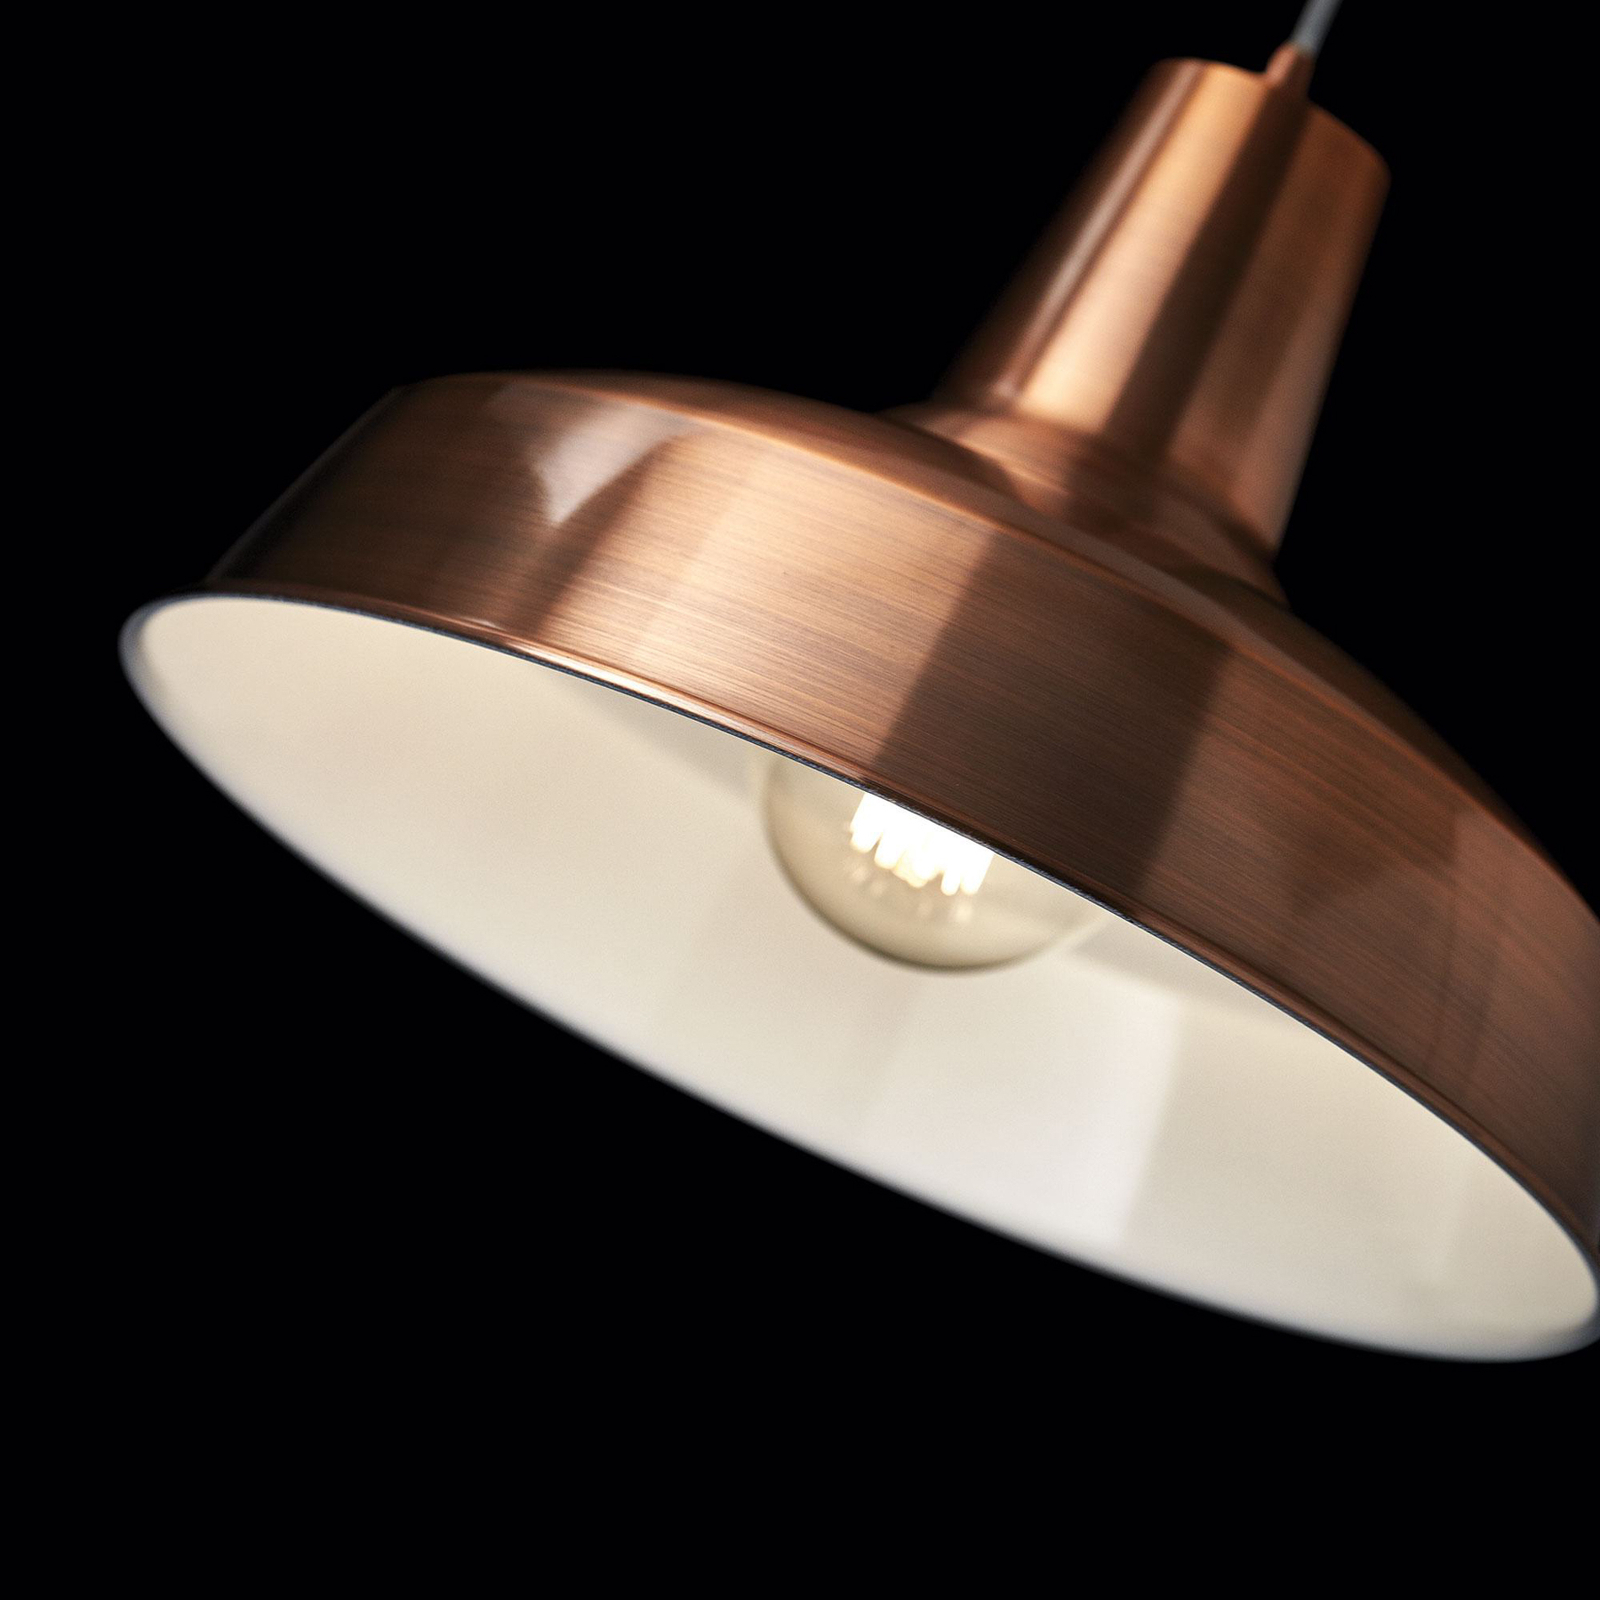 Lampa wisząca Ideal Lux Moby, kolor miedziany, metal, Ø 35 cm